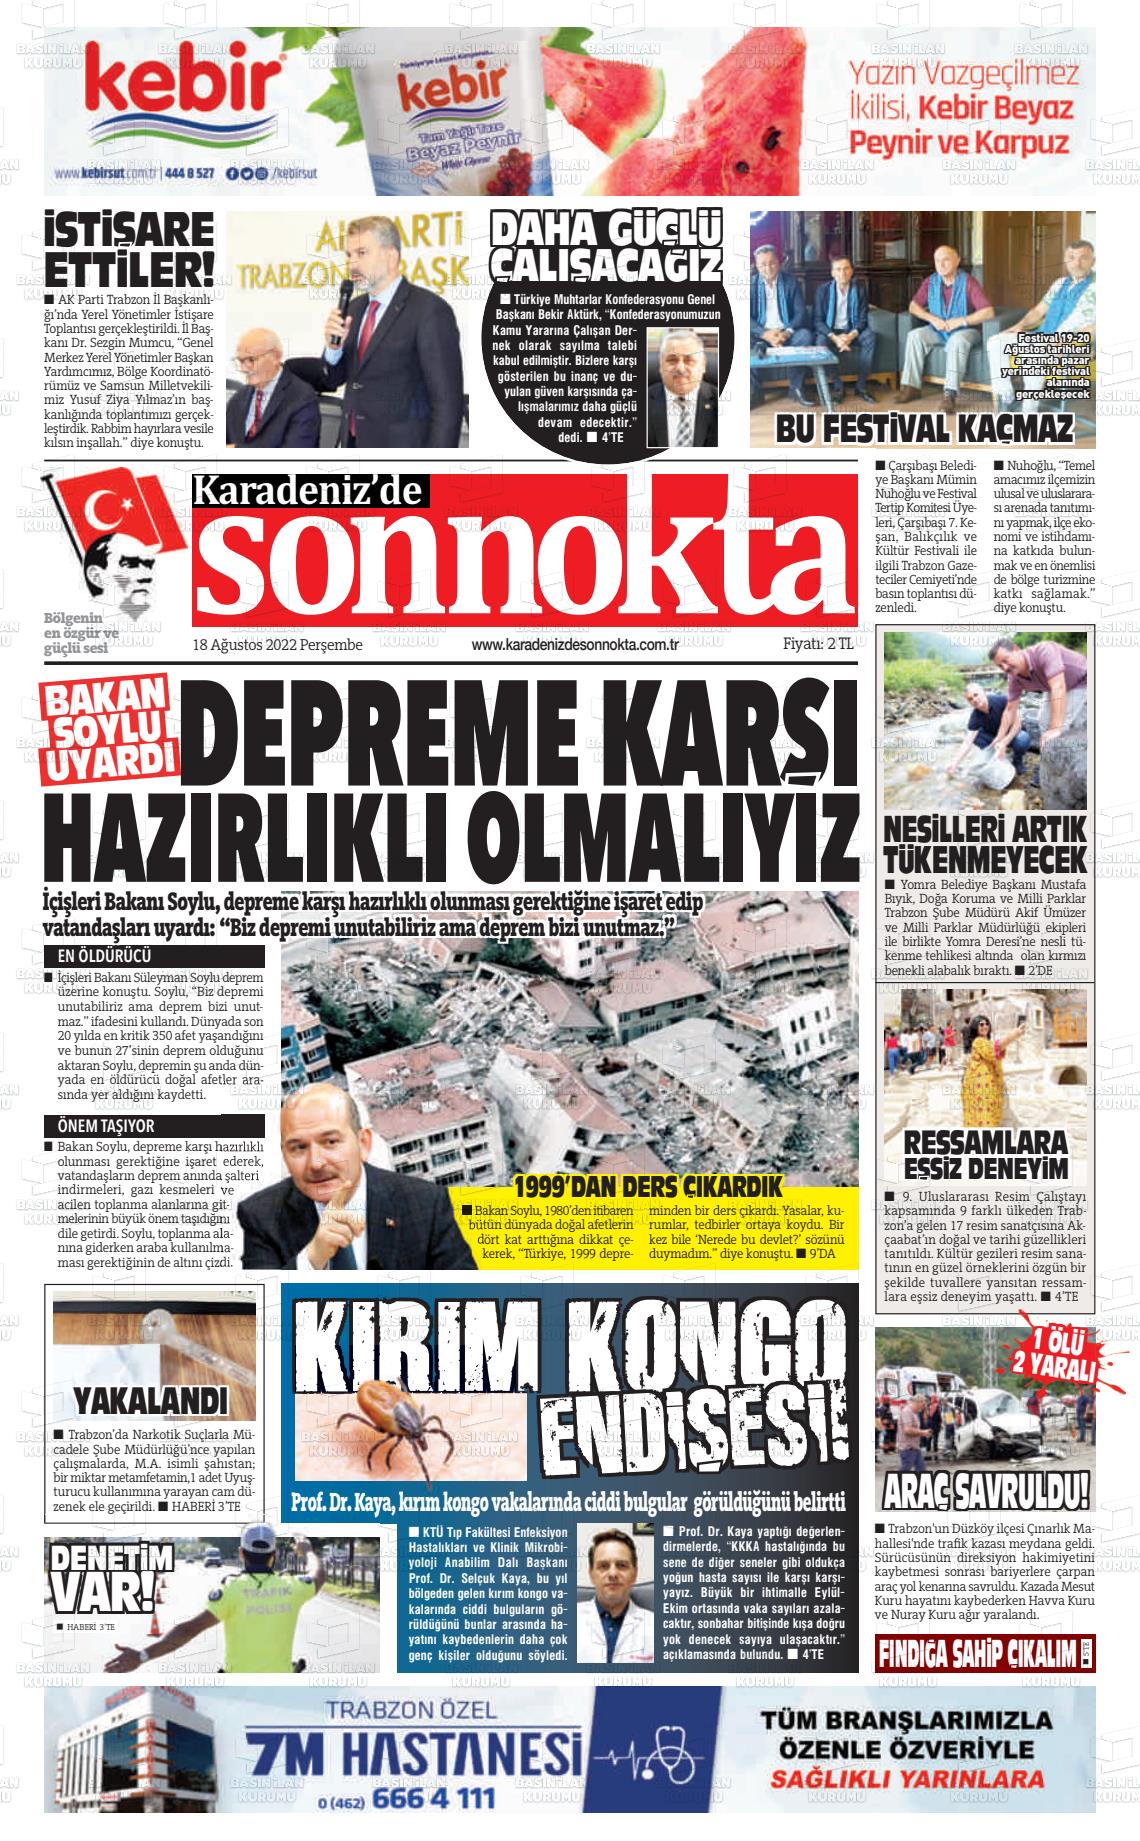 18 Ağustos 2022 Karadeniz'de Sonnokta Gazete Manşeti